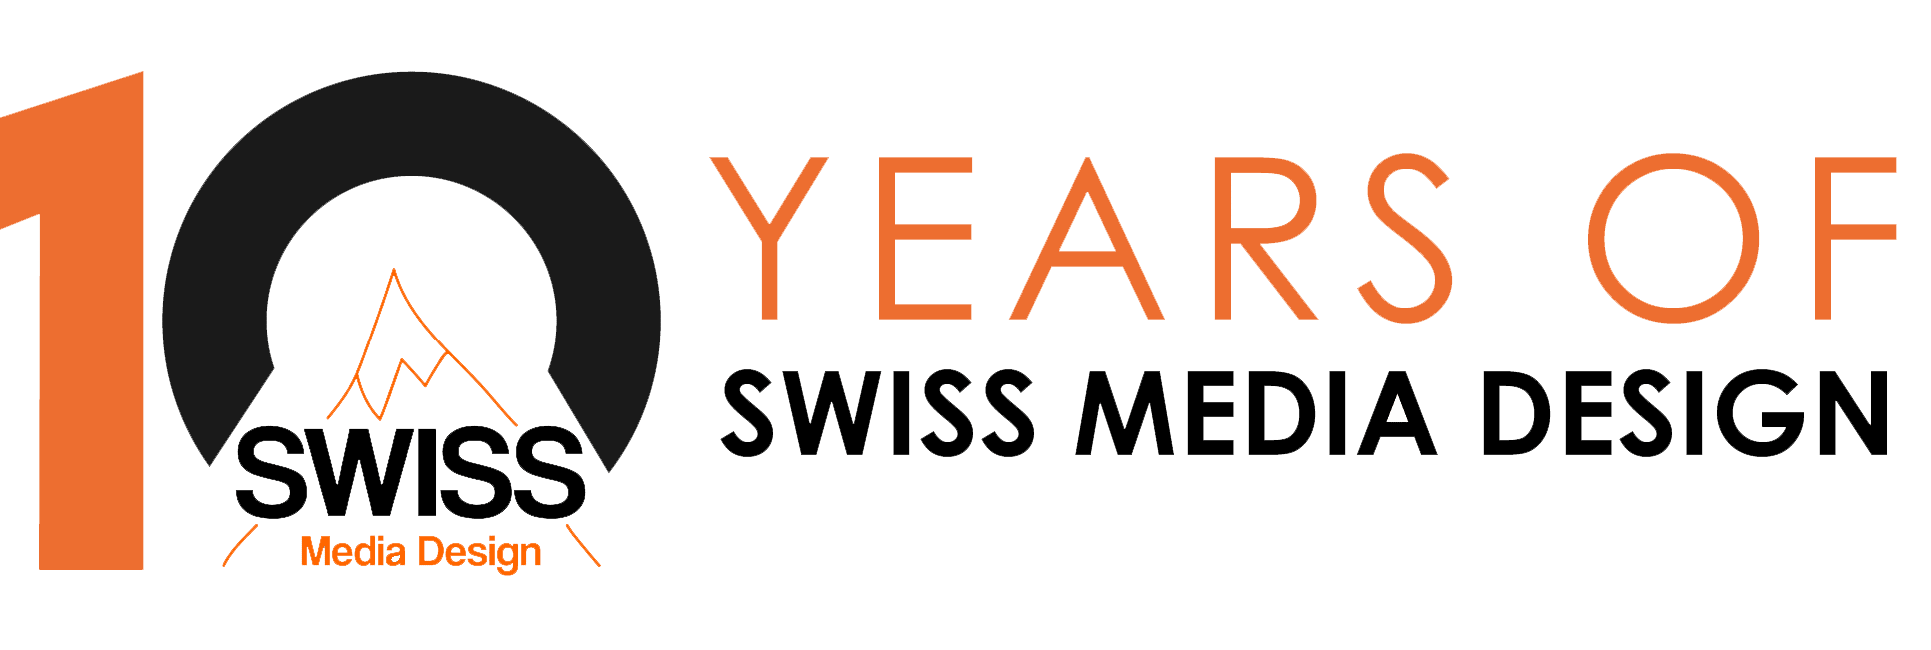 Swiss Media Design